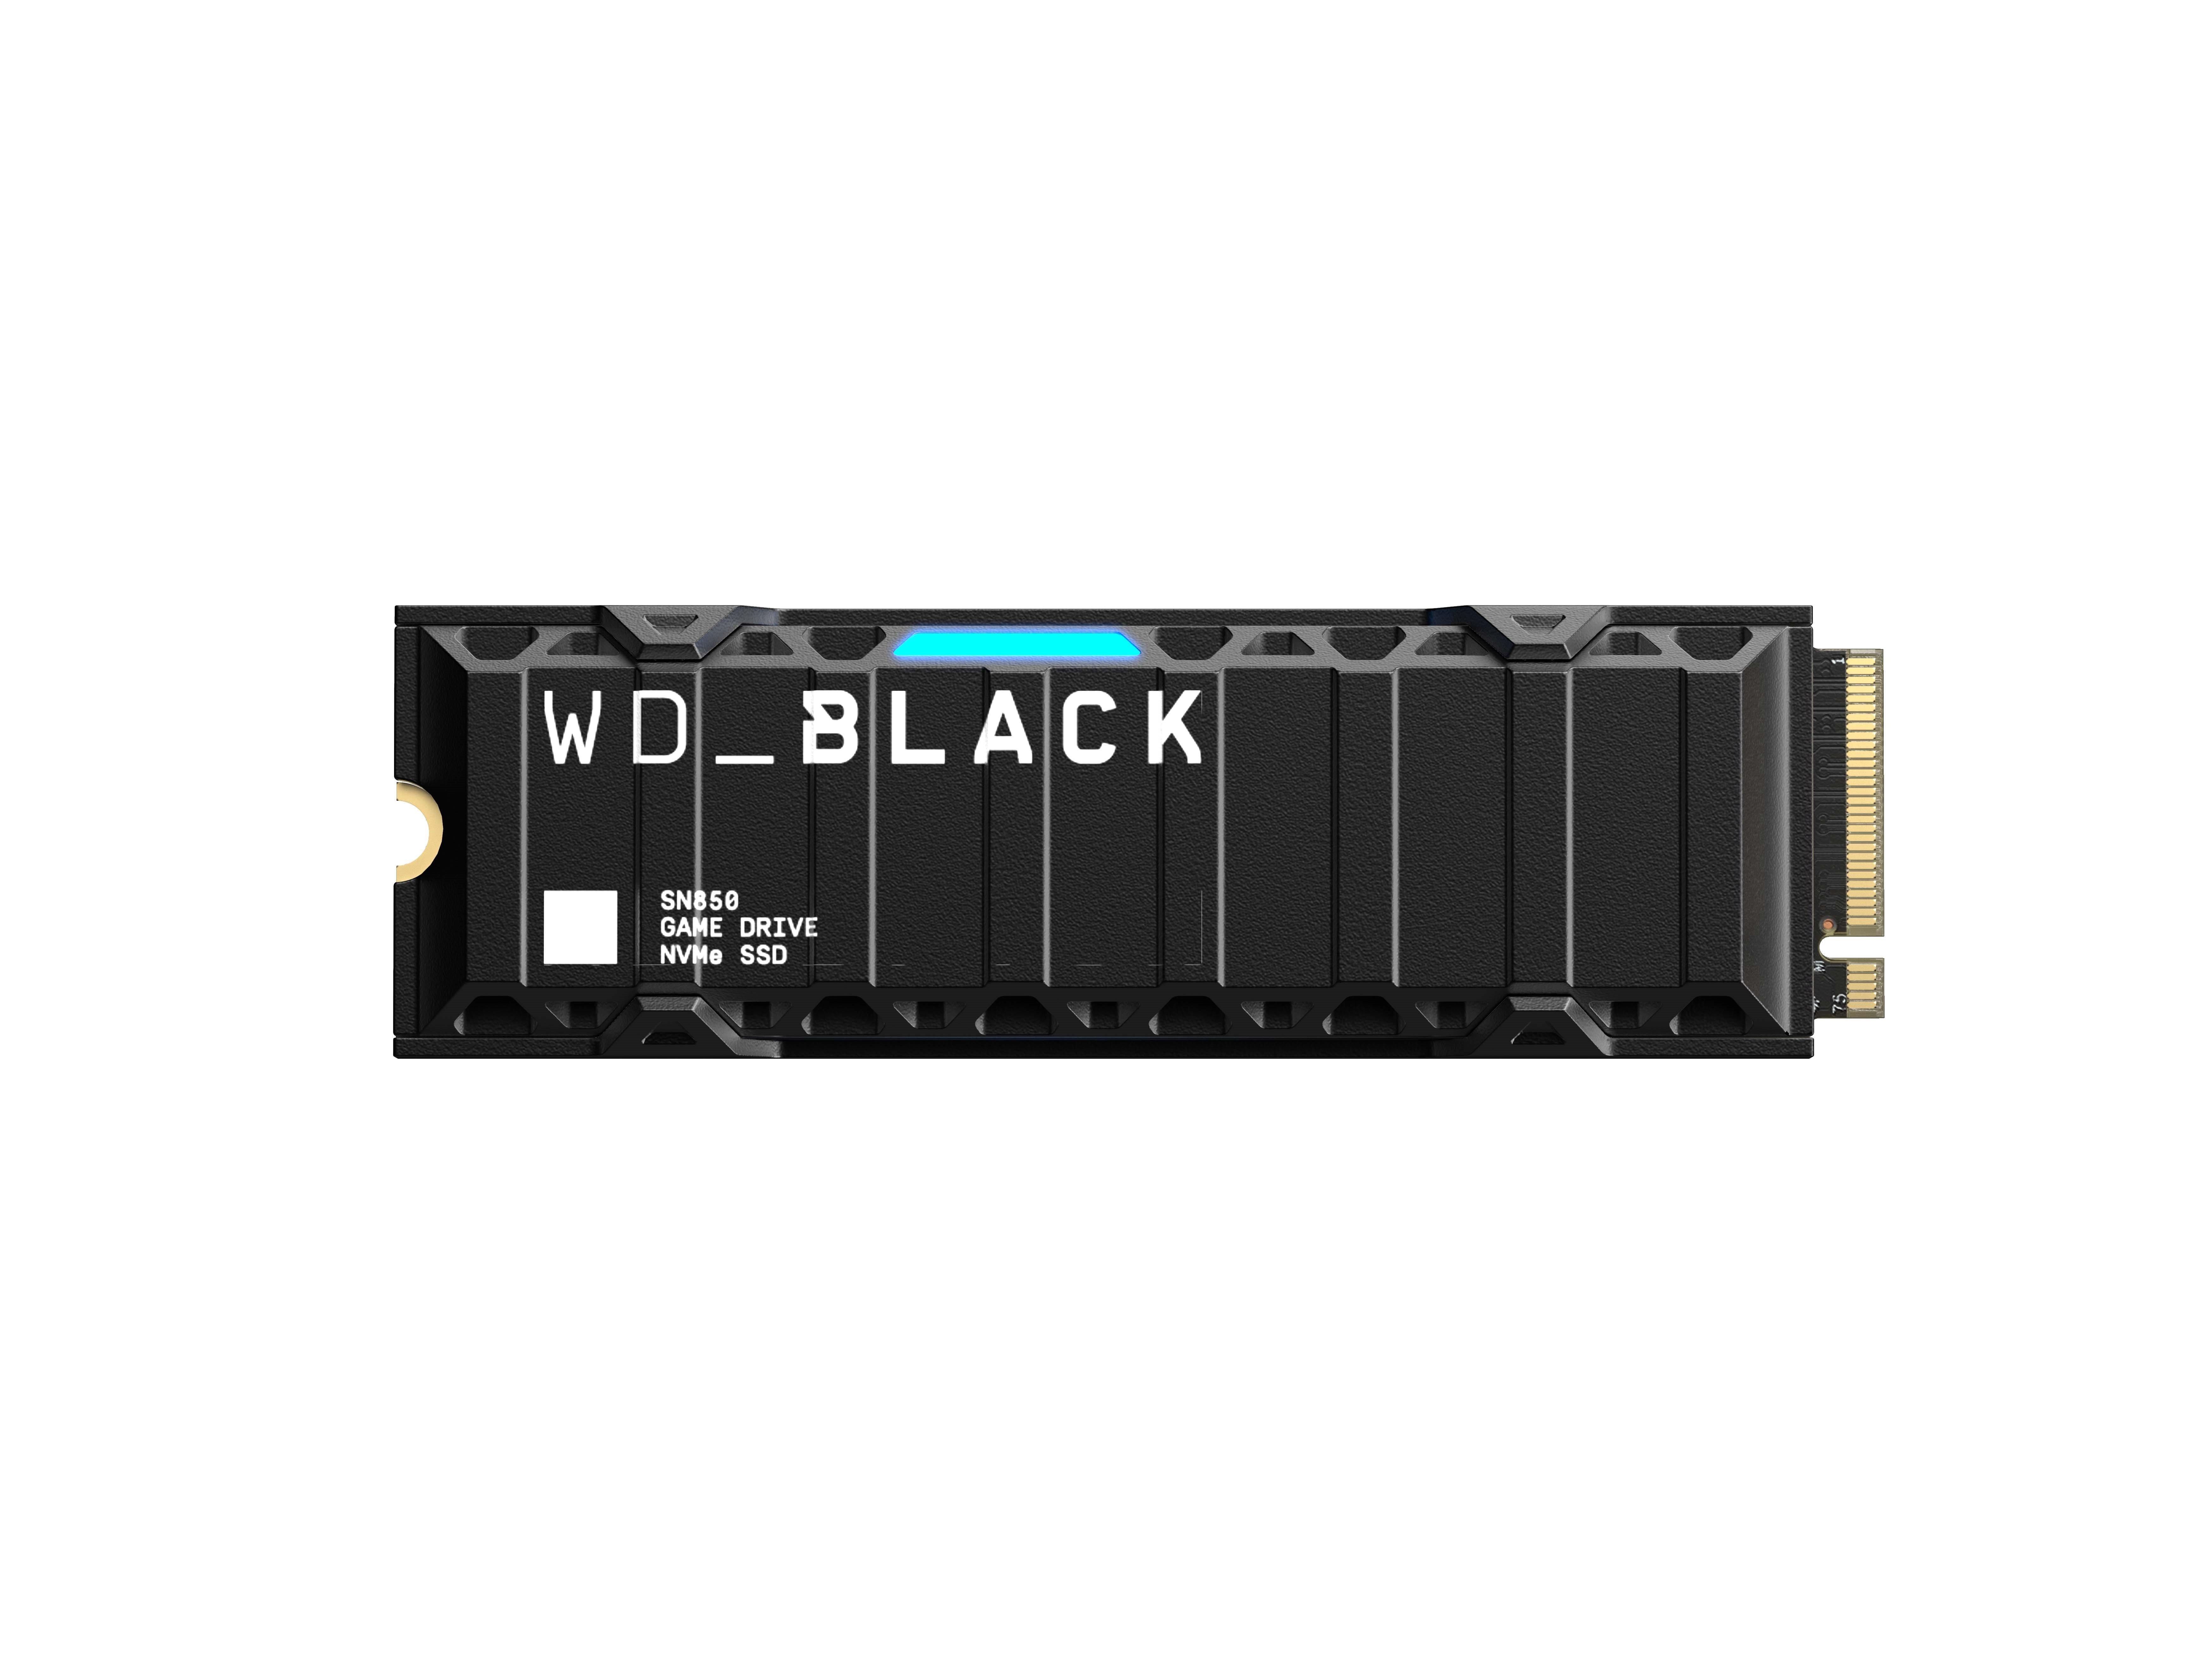 WD_BLACK SN850 NVMe SSD PCIe Gen 4 x4 with Heatsink for PlayStation 5 | GameStop